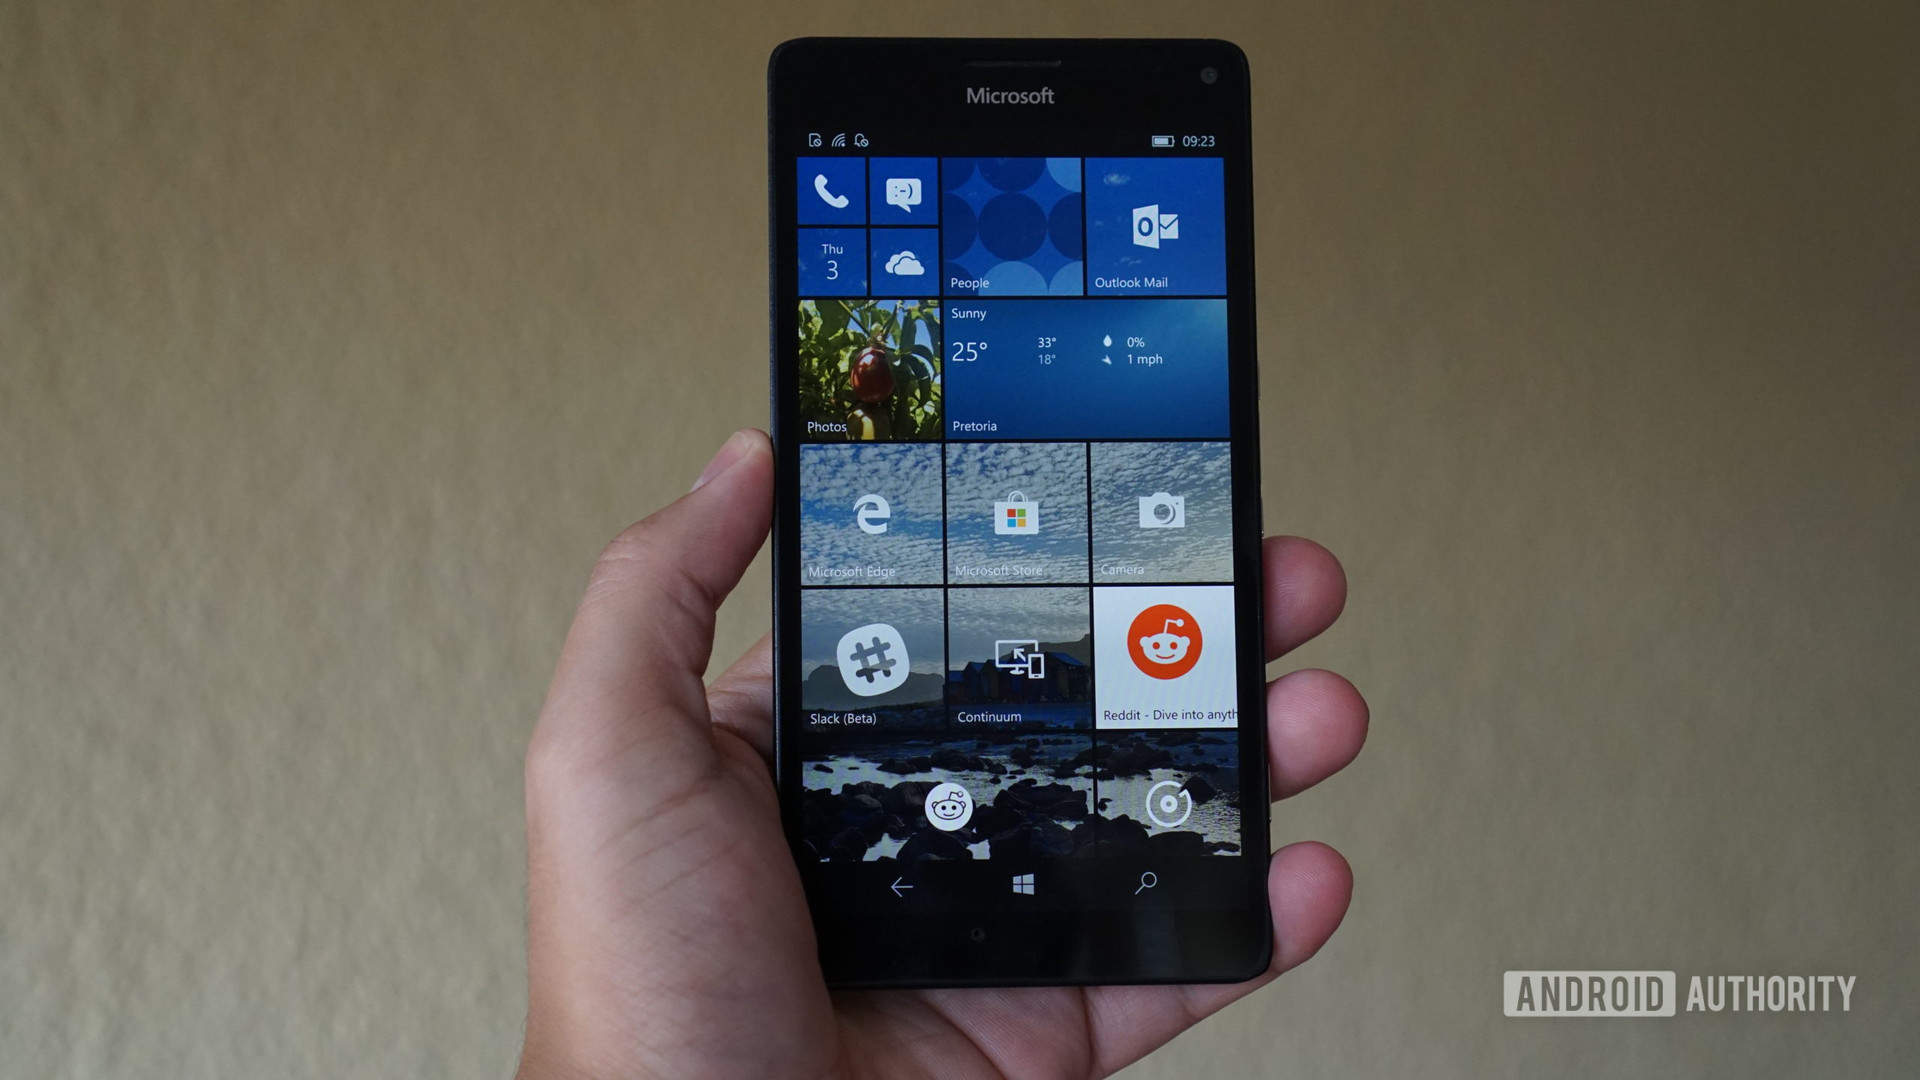 Windows 10 Mobile start screen on phone in hand